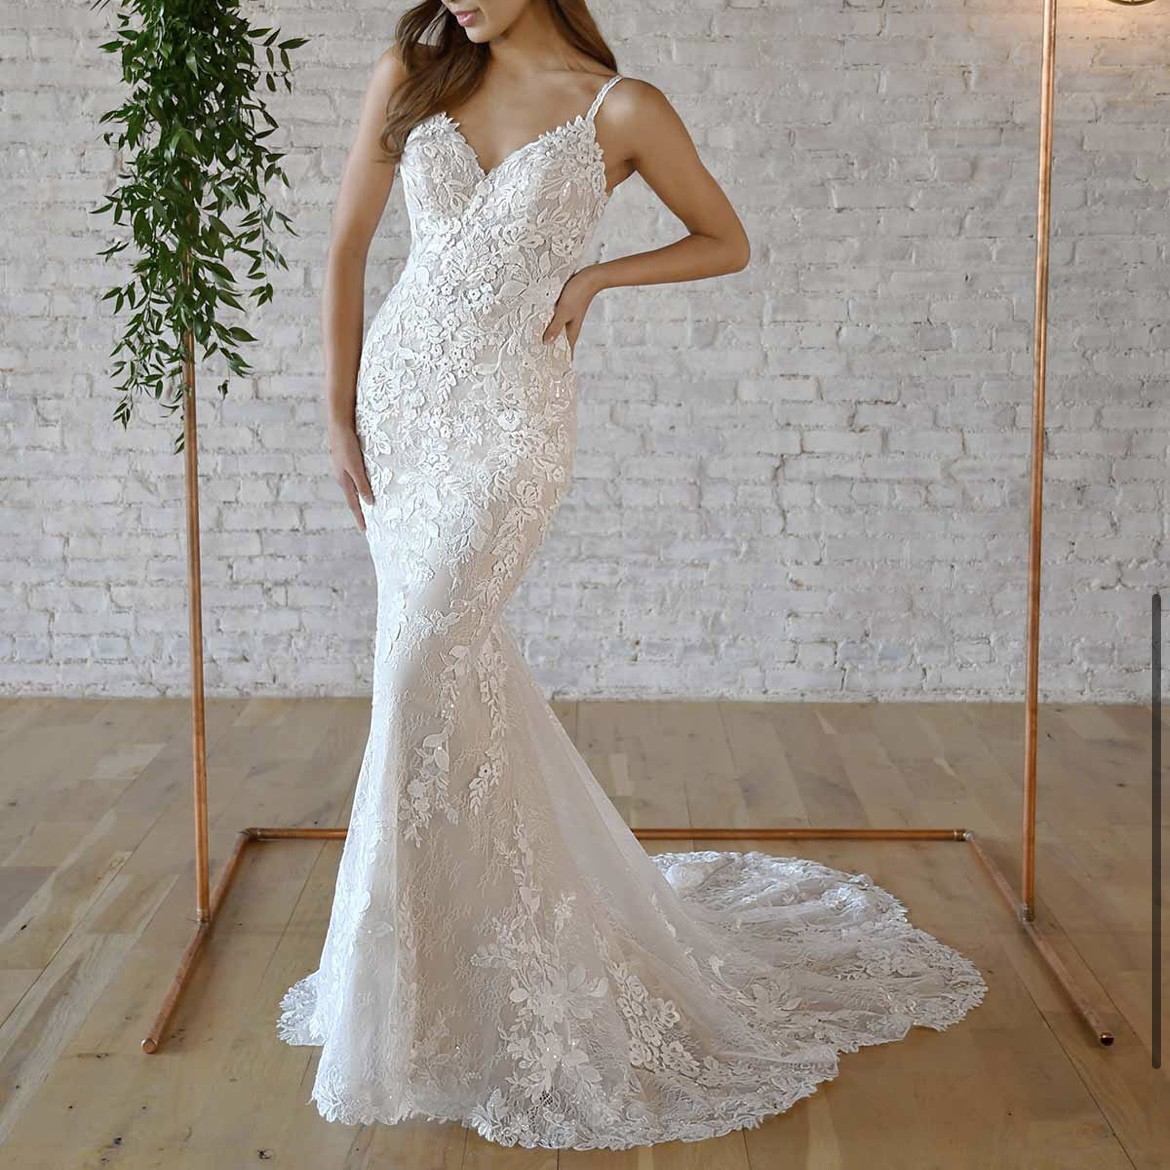 Stella York 7370 Sample Wedding Dress Save 54% - Stillwhite